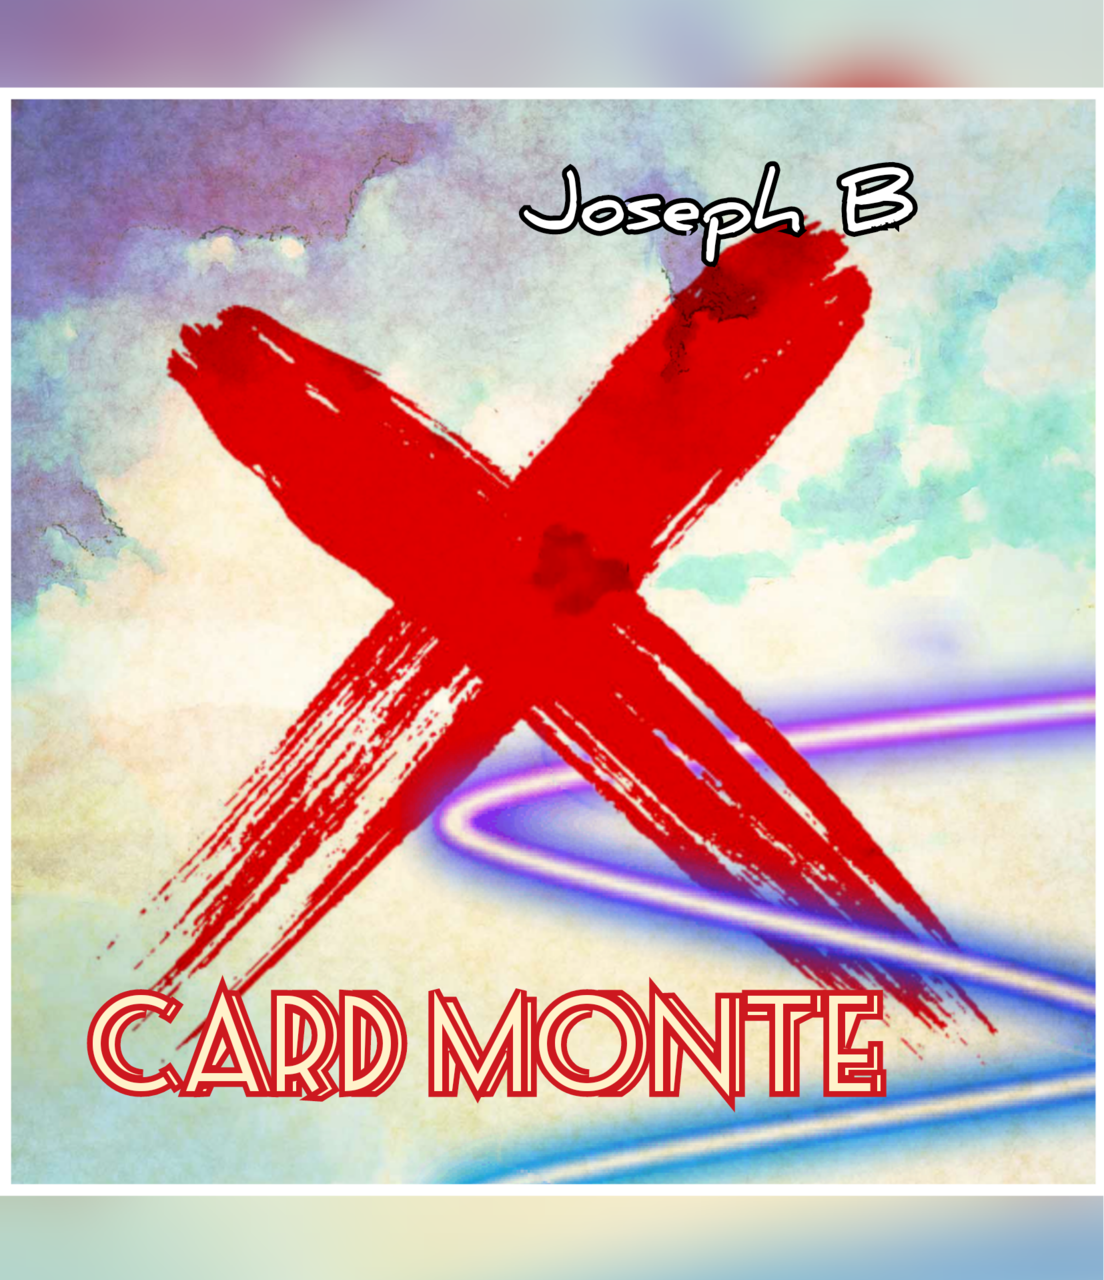 X Card Monte by Joseph B. (Mp4 Video Download)